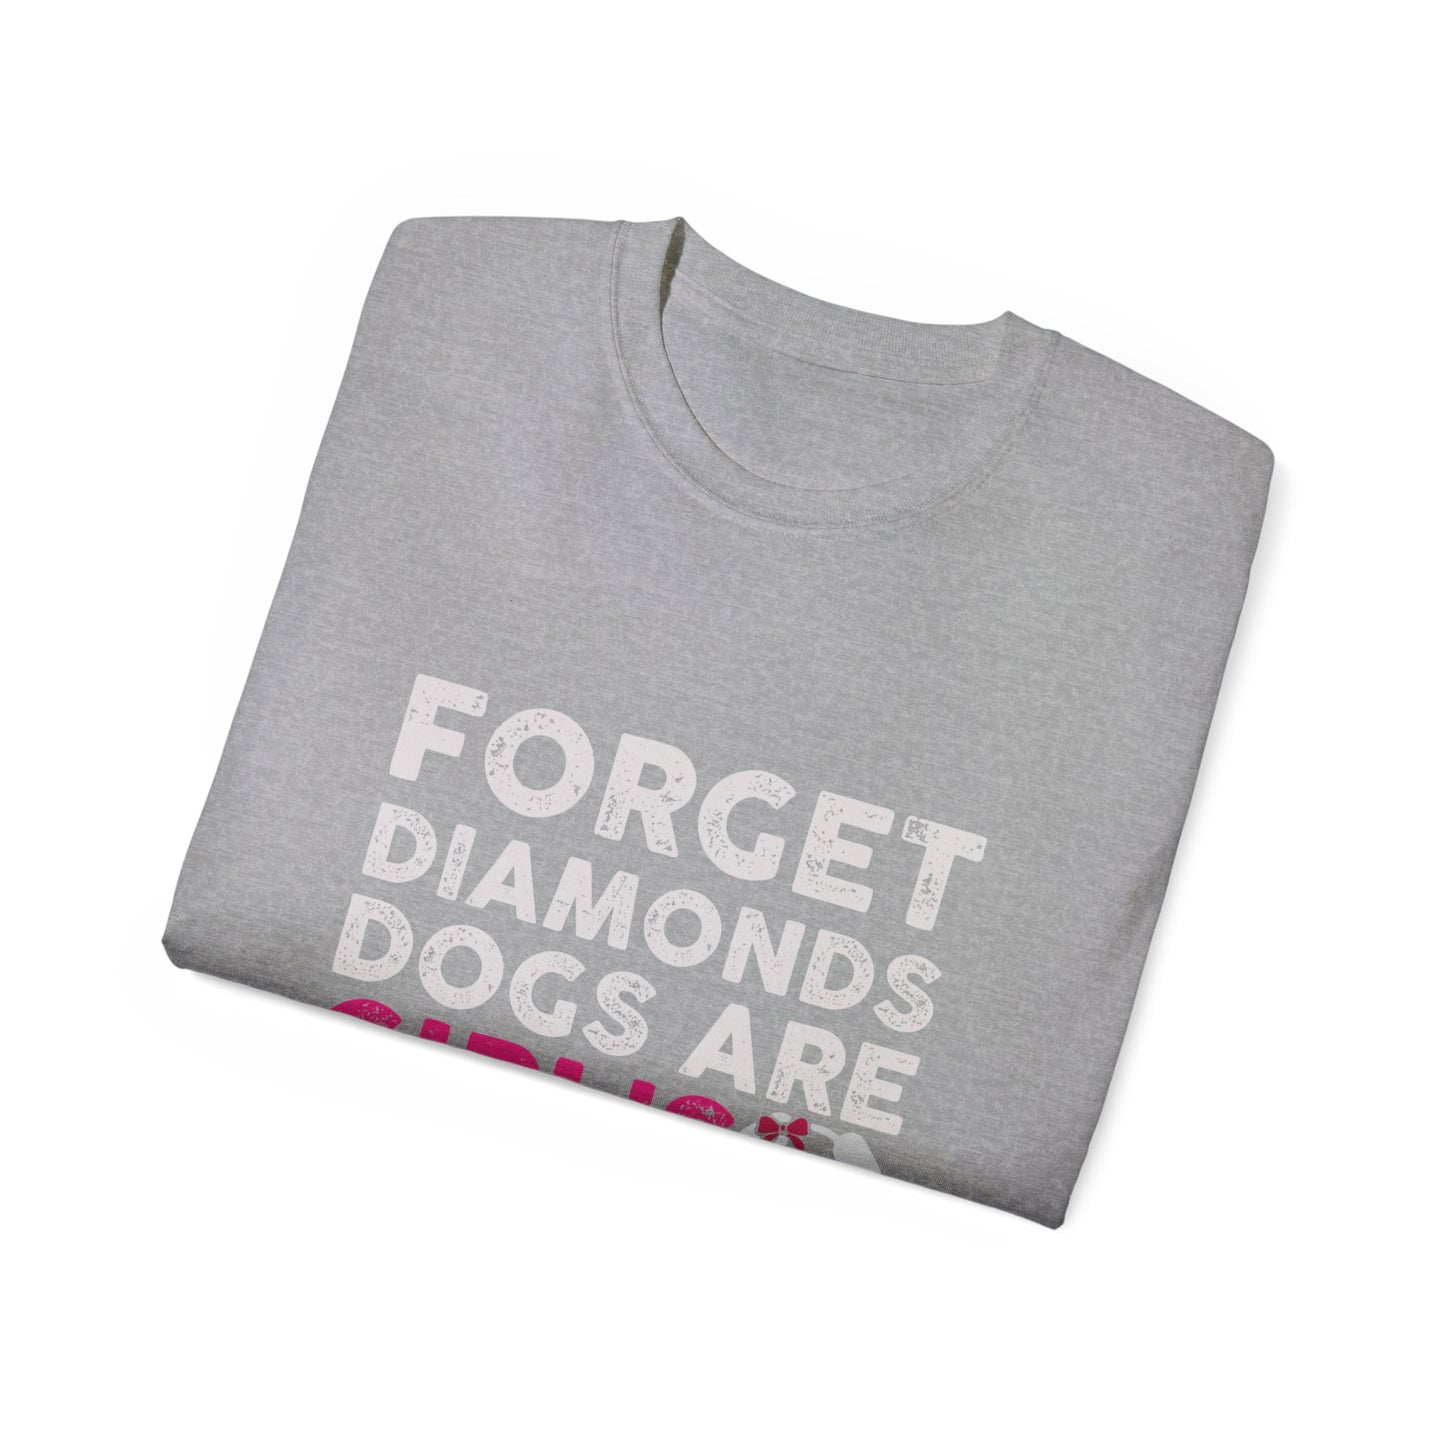 Forget Diamonds